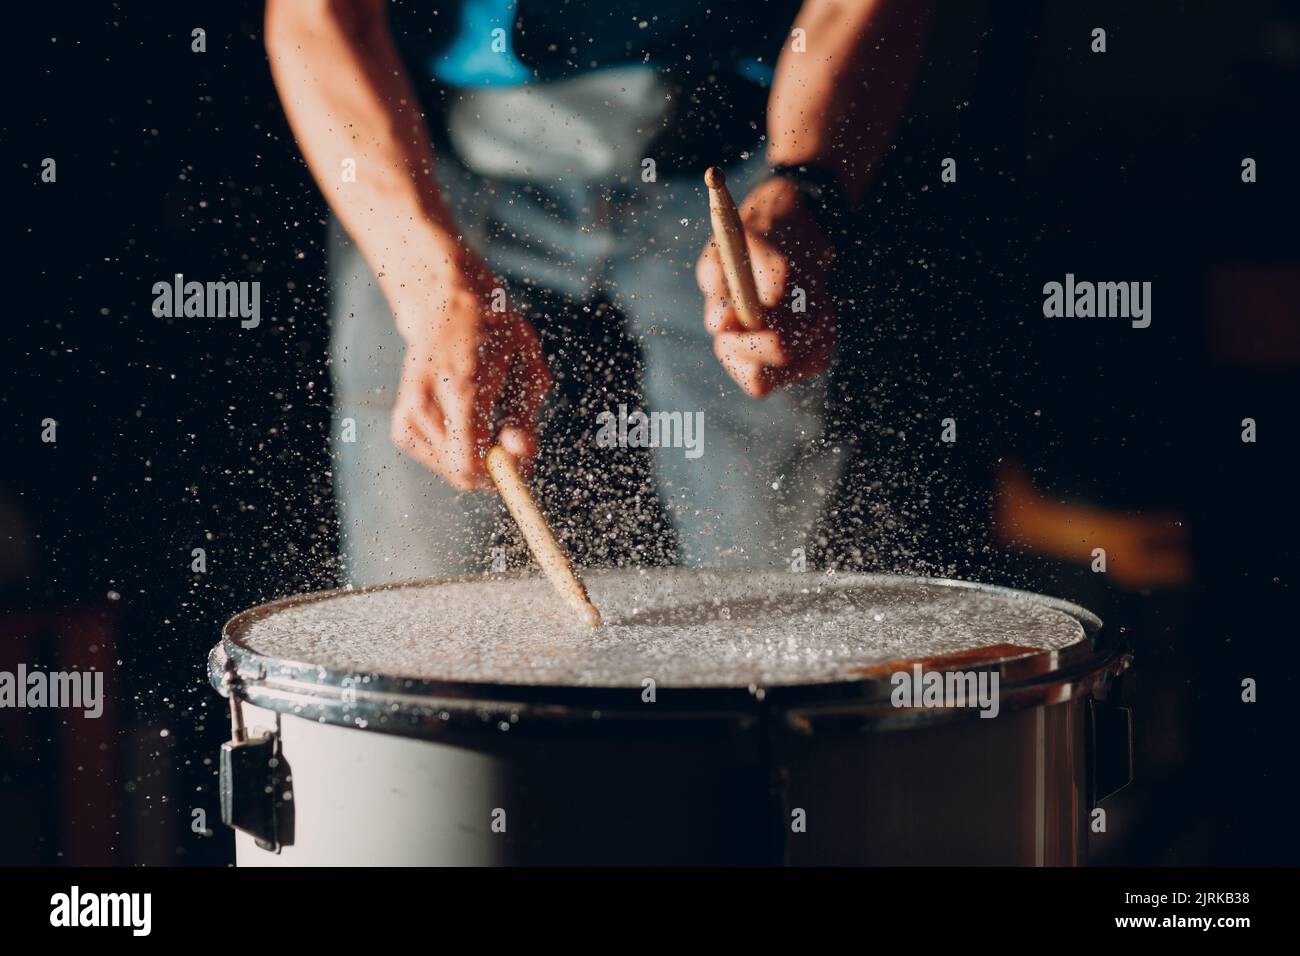 Close up drum sticks drumming hit beat rhythm on drum surface with splash water drops falling Stock Photo